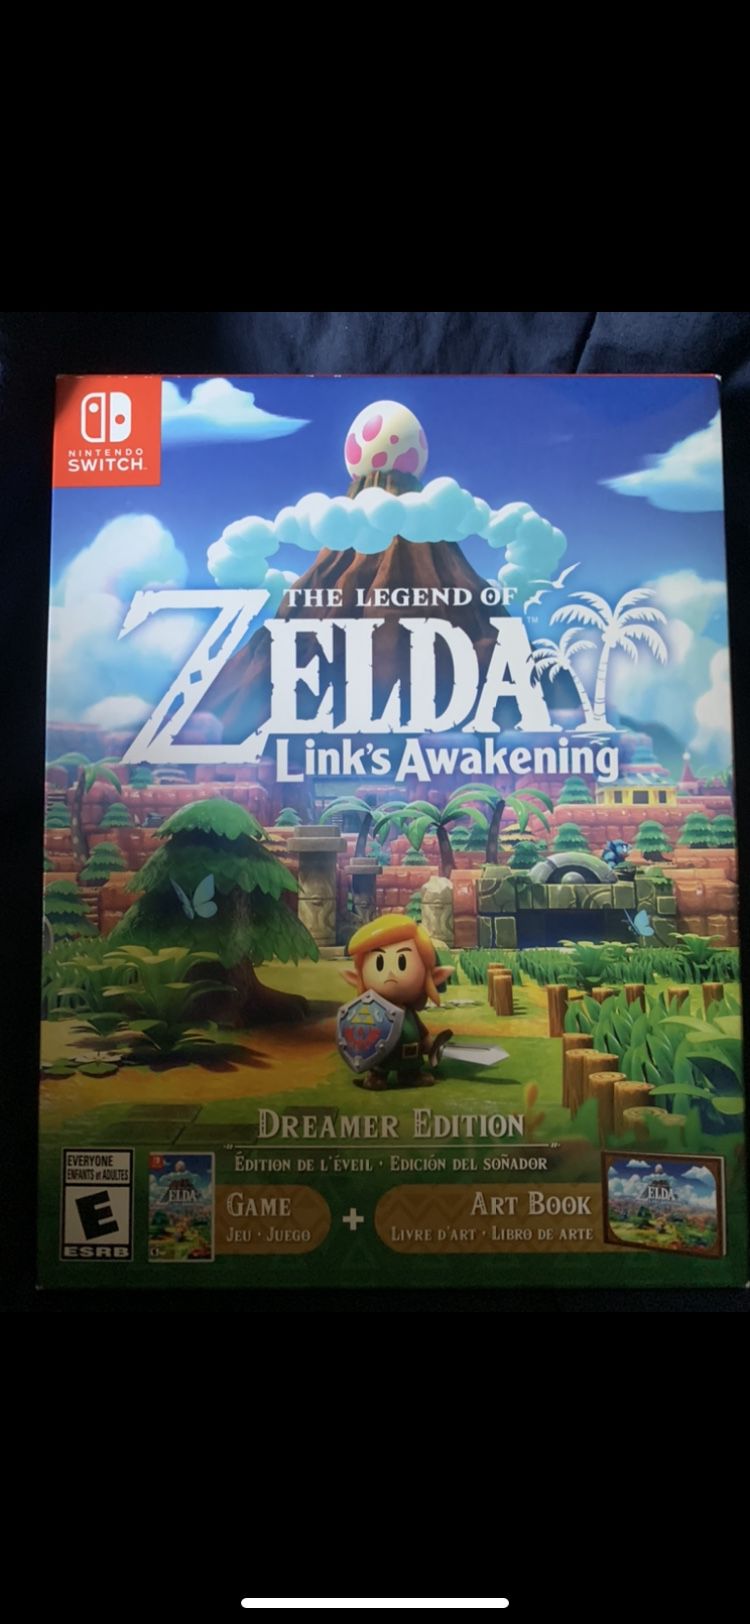 The Legend of Zelda: Link’s Awakening Dreamer edition